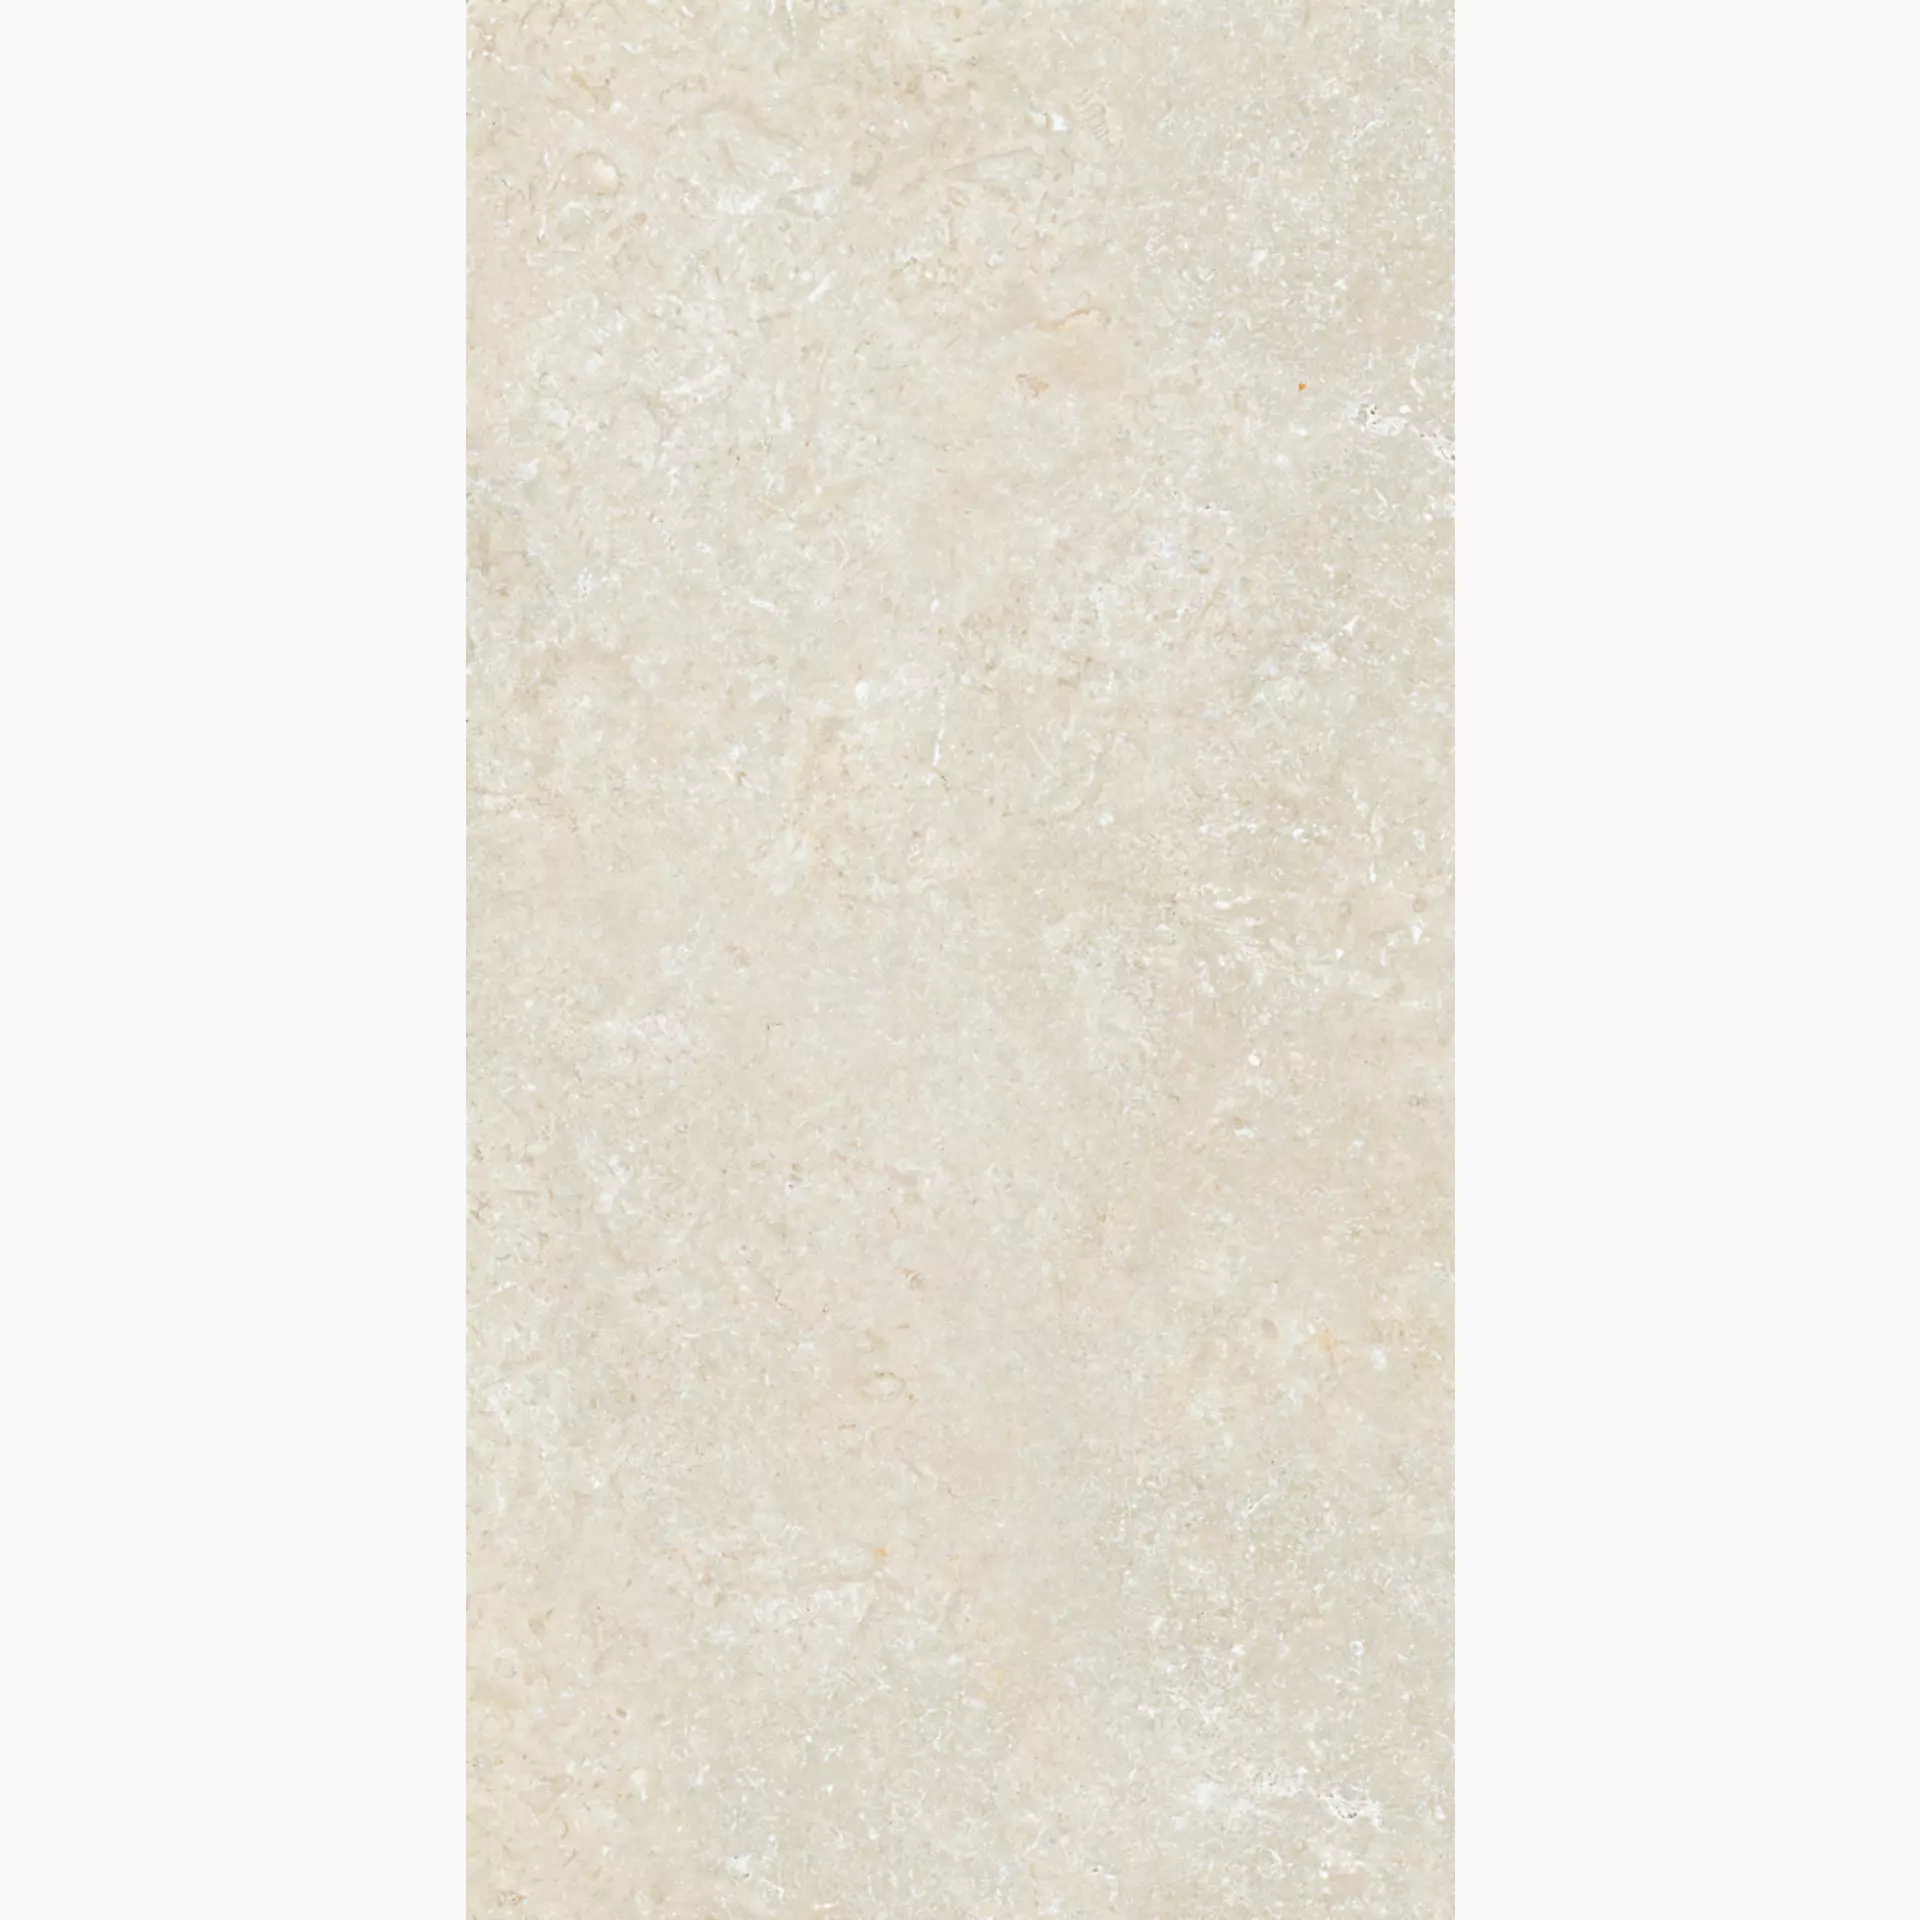 Cottodeste Secret Stone Mystery White Grip EG-SS05 30x60cm rectified 14mm